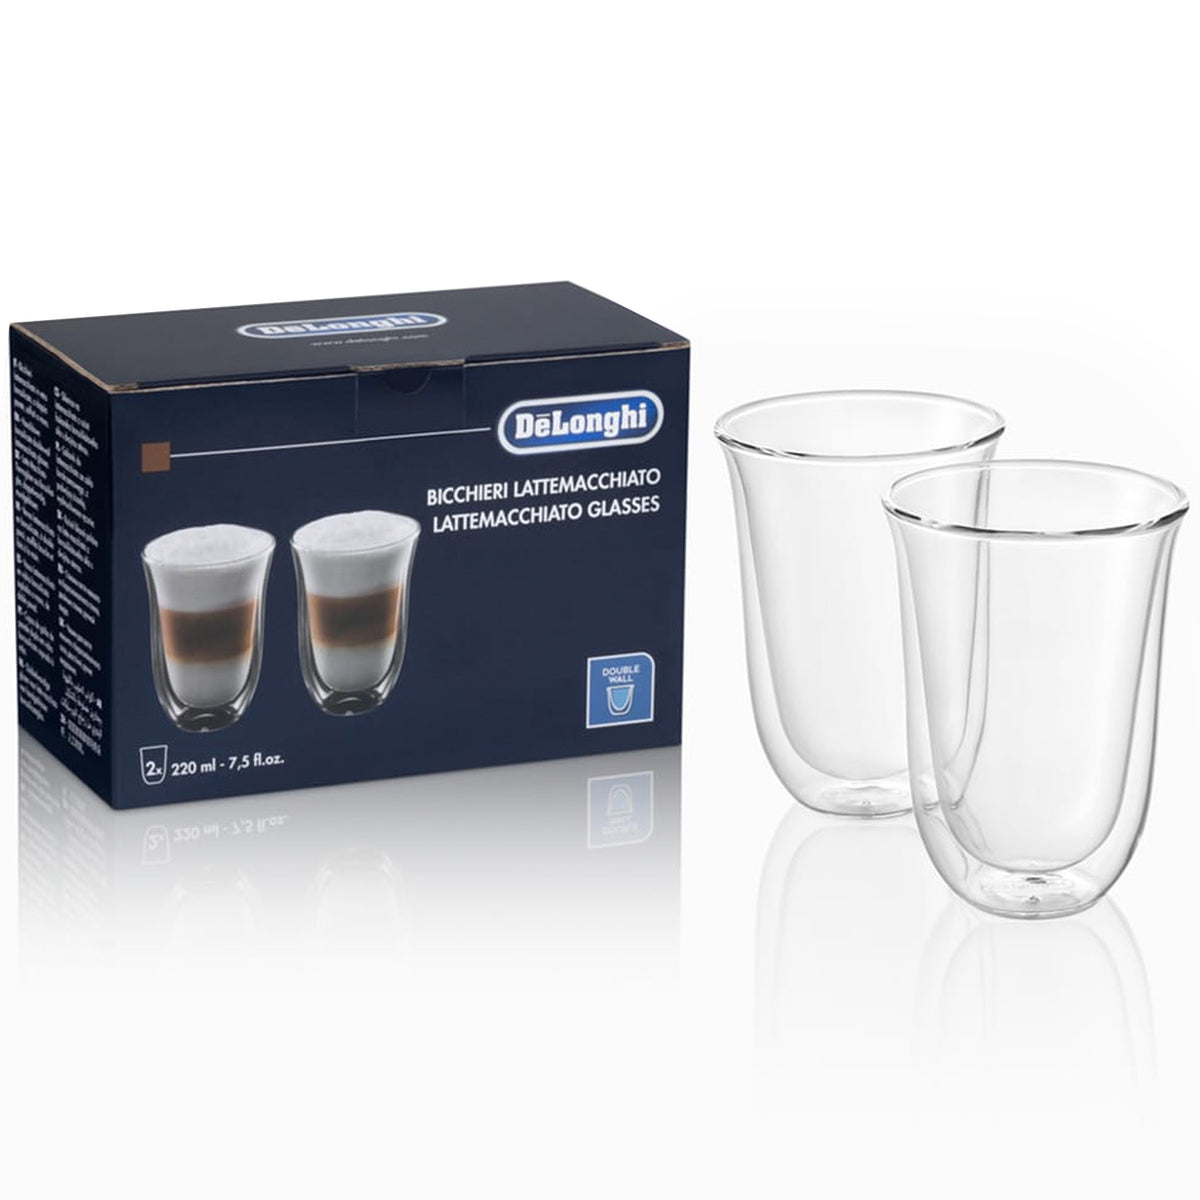 DeLonghi Bicchieri Glass Latte Macchiato 2 Cups, ECS – of Coffee Set